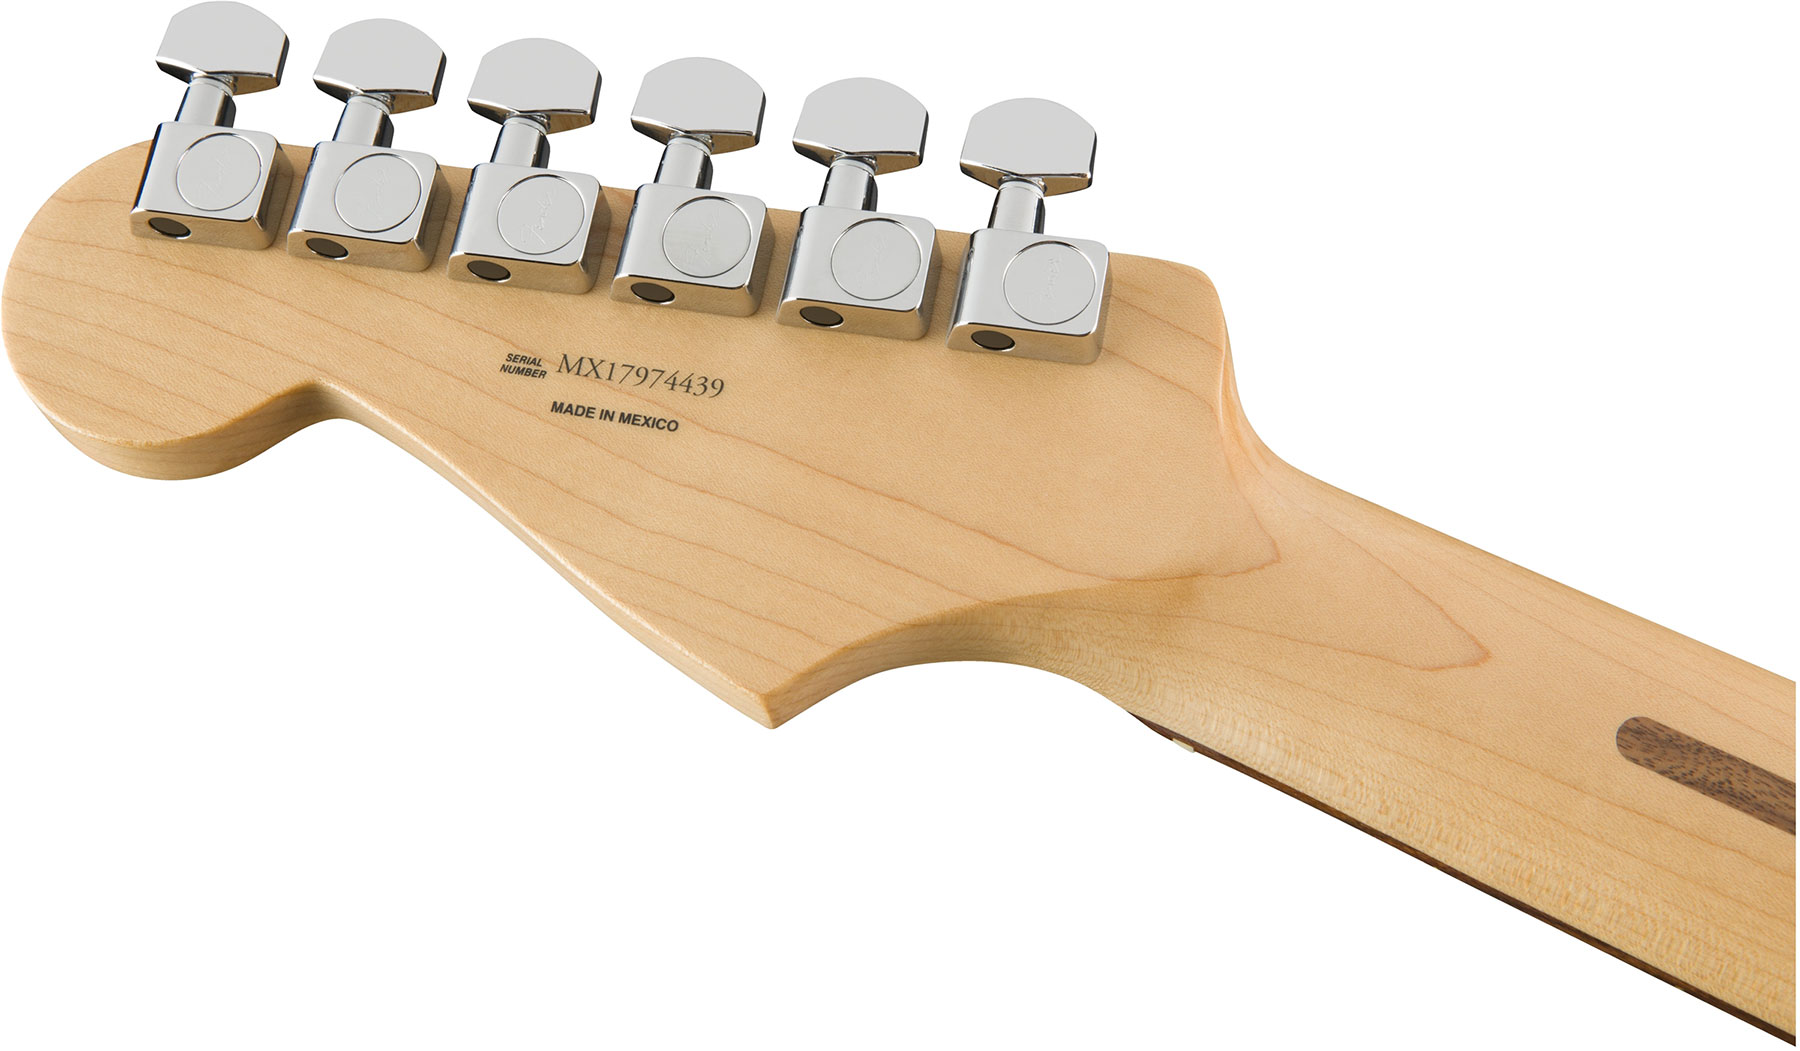 Fender Strat Player Mex Sss Pf - Black - Str shape electric guitar - Variation 3